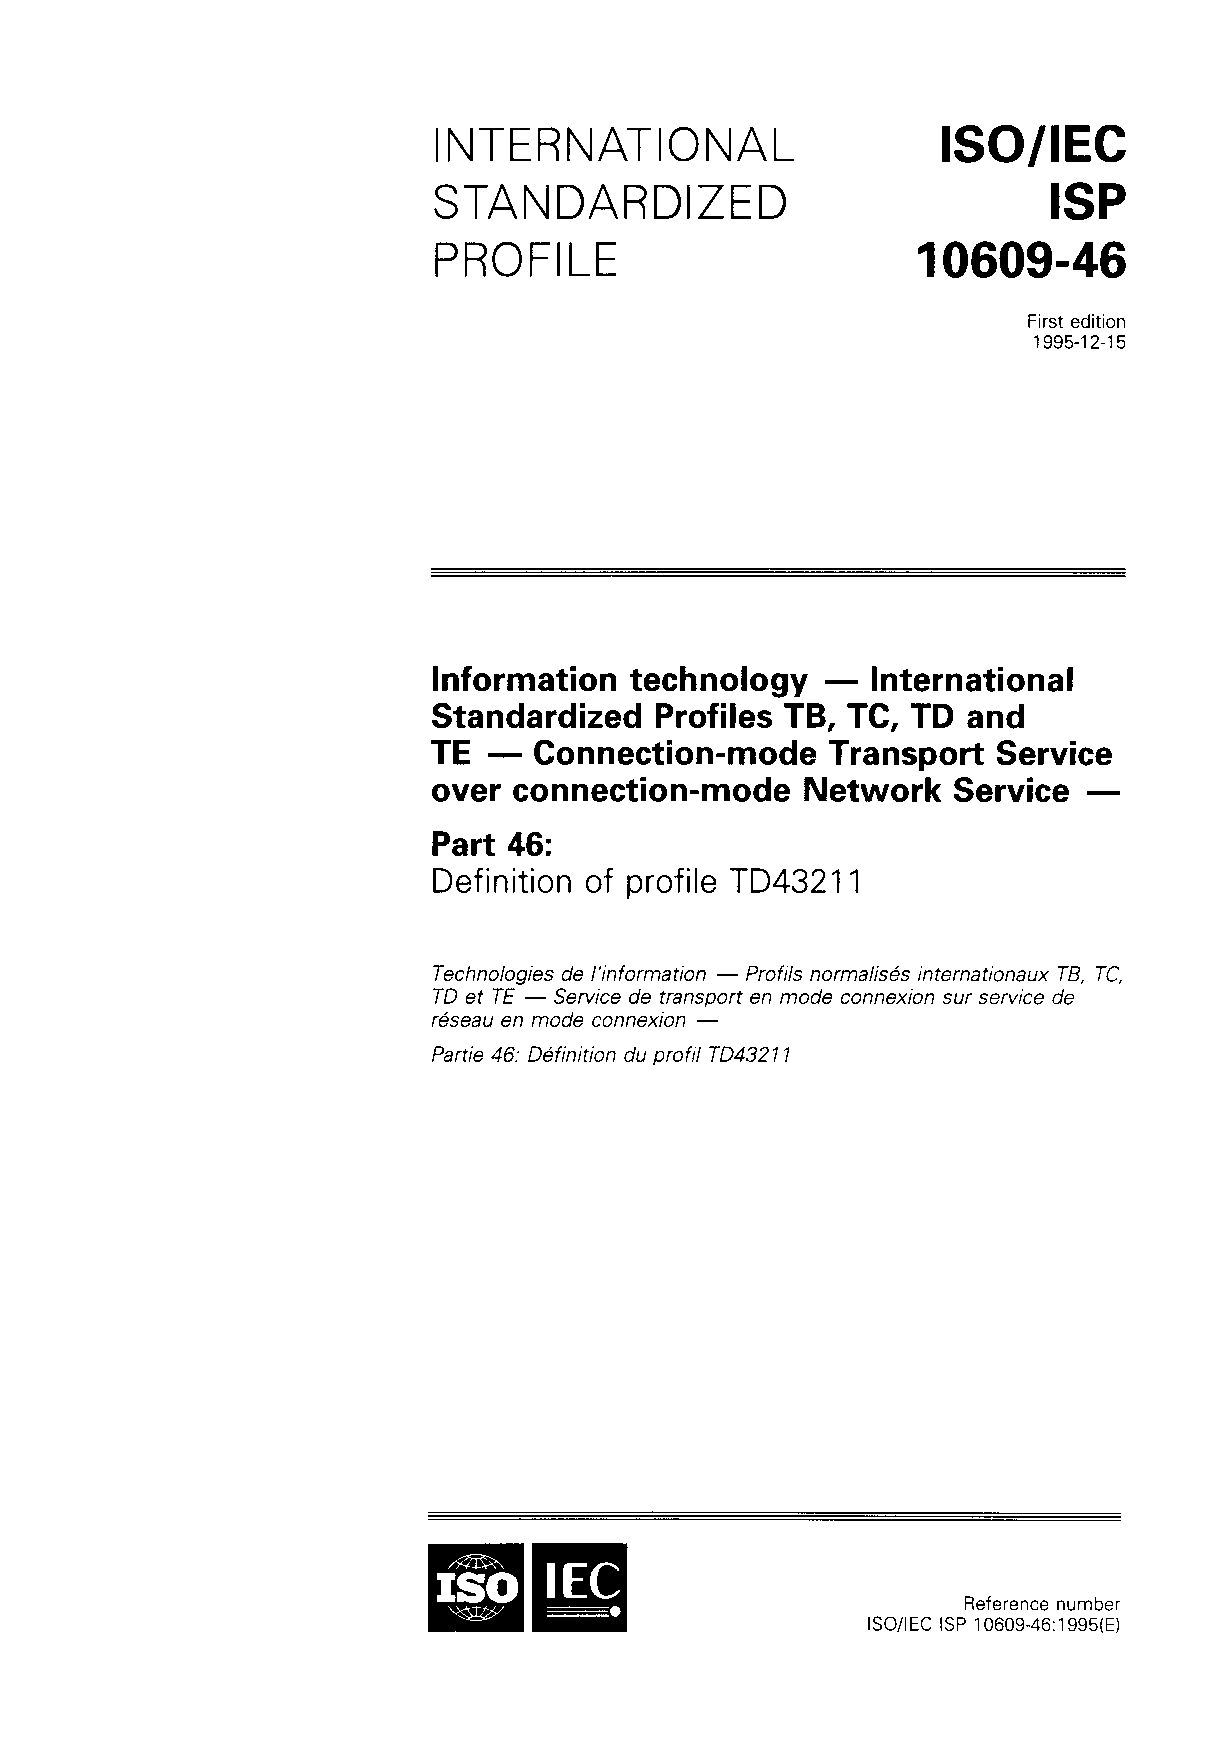 ISO/IEC ISP 10609-46:1995